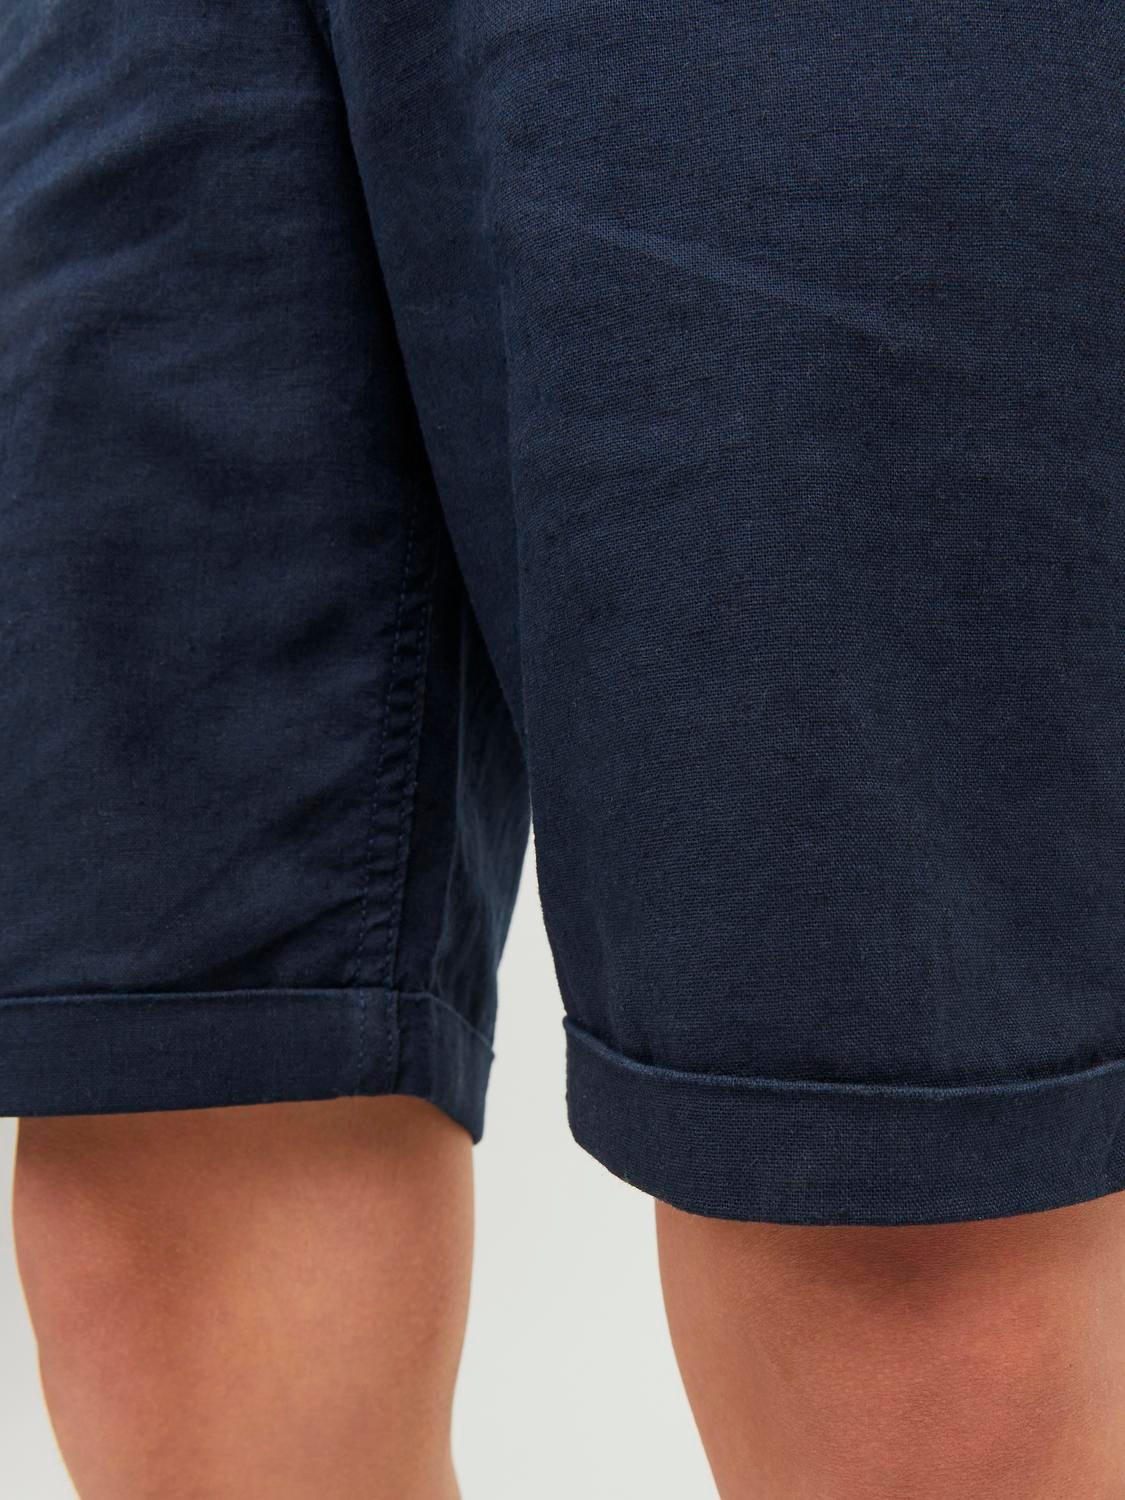 Jack & Jones Regular Fit Denim shorts For boys -Navy Blazer - 12241858